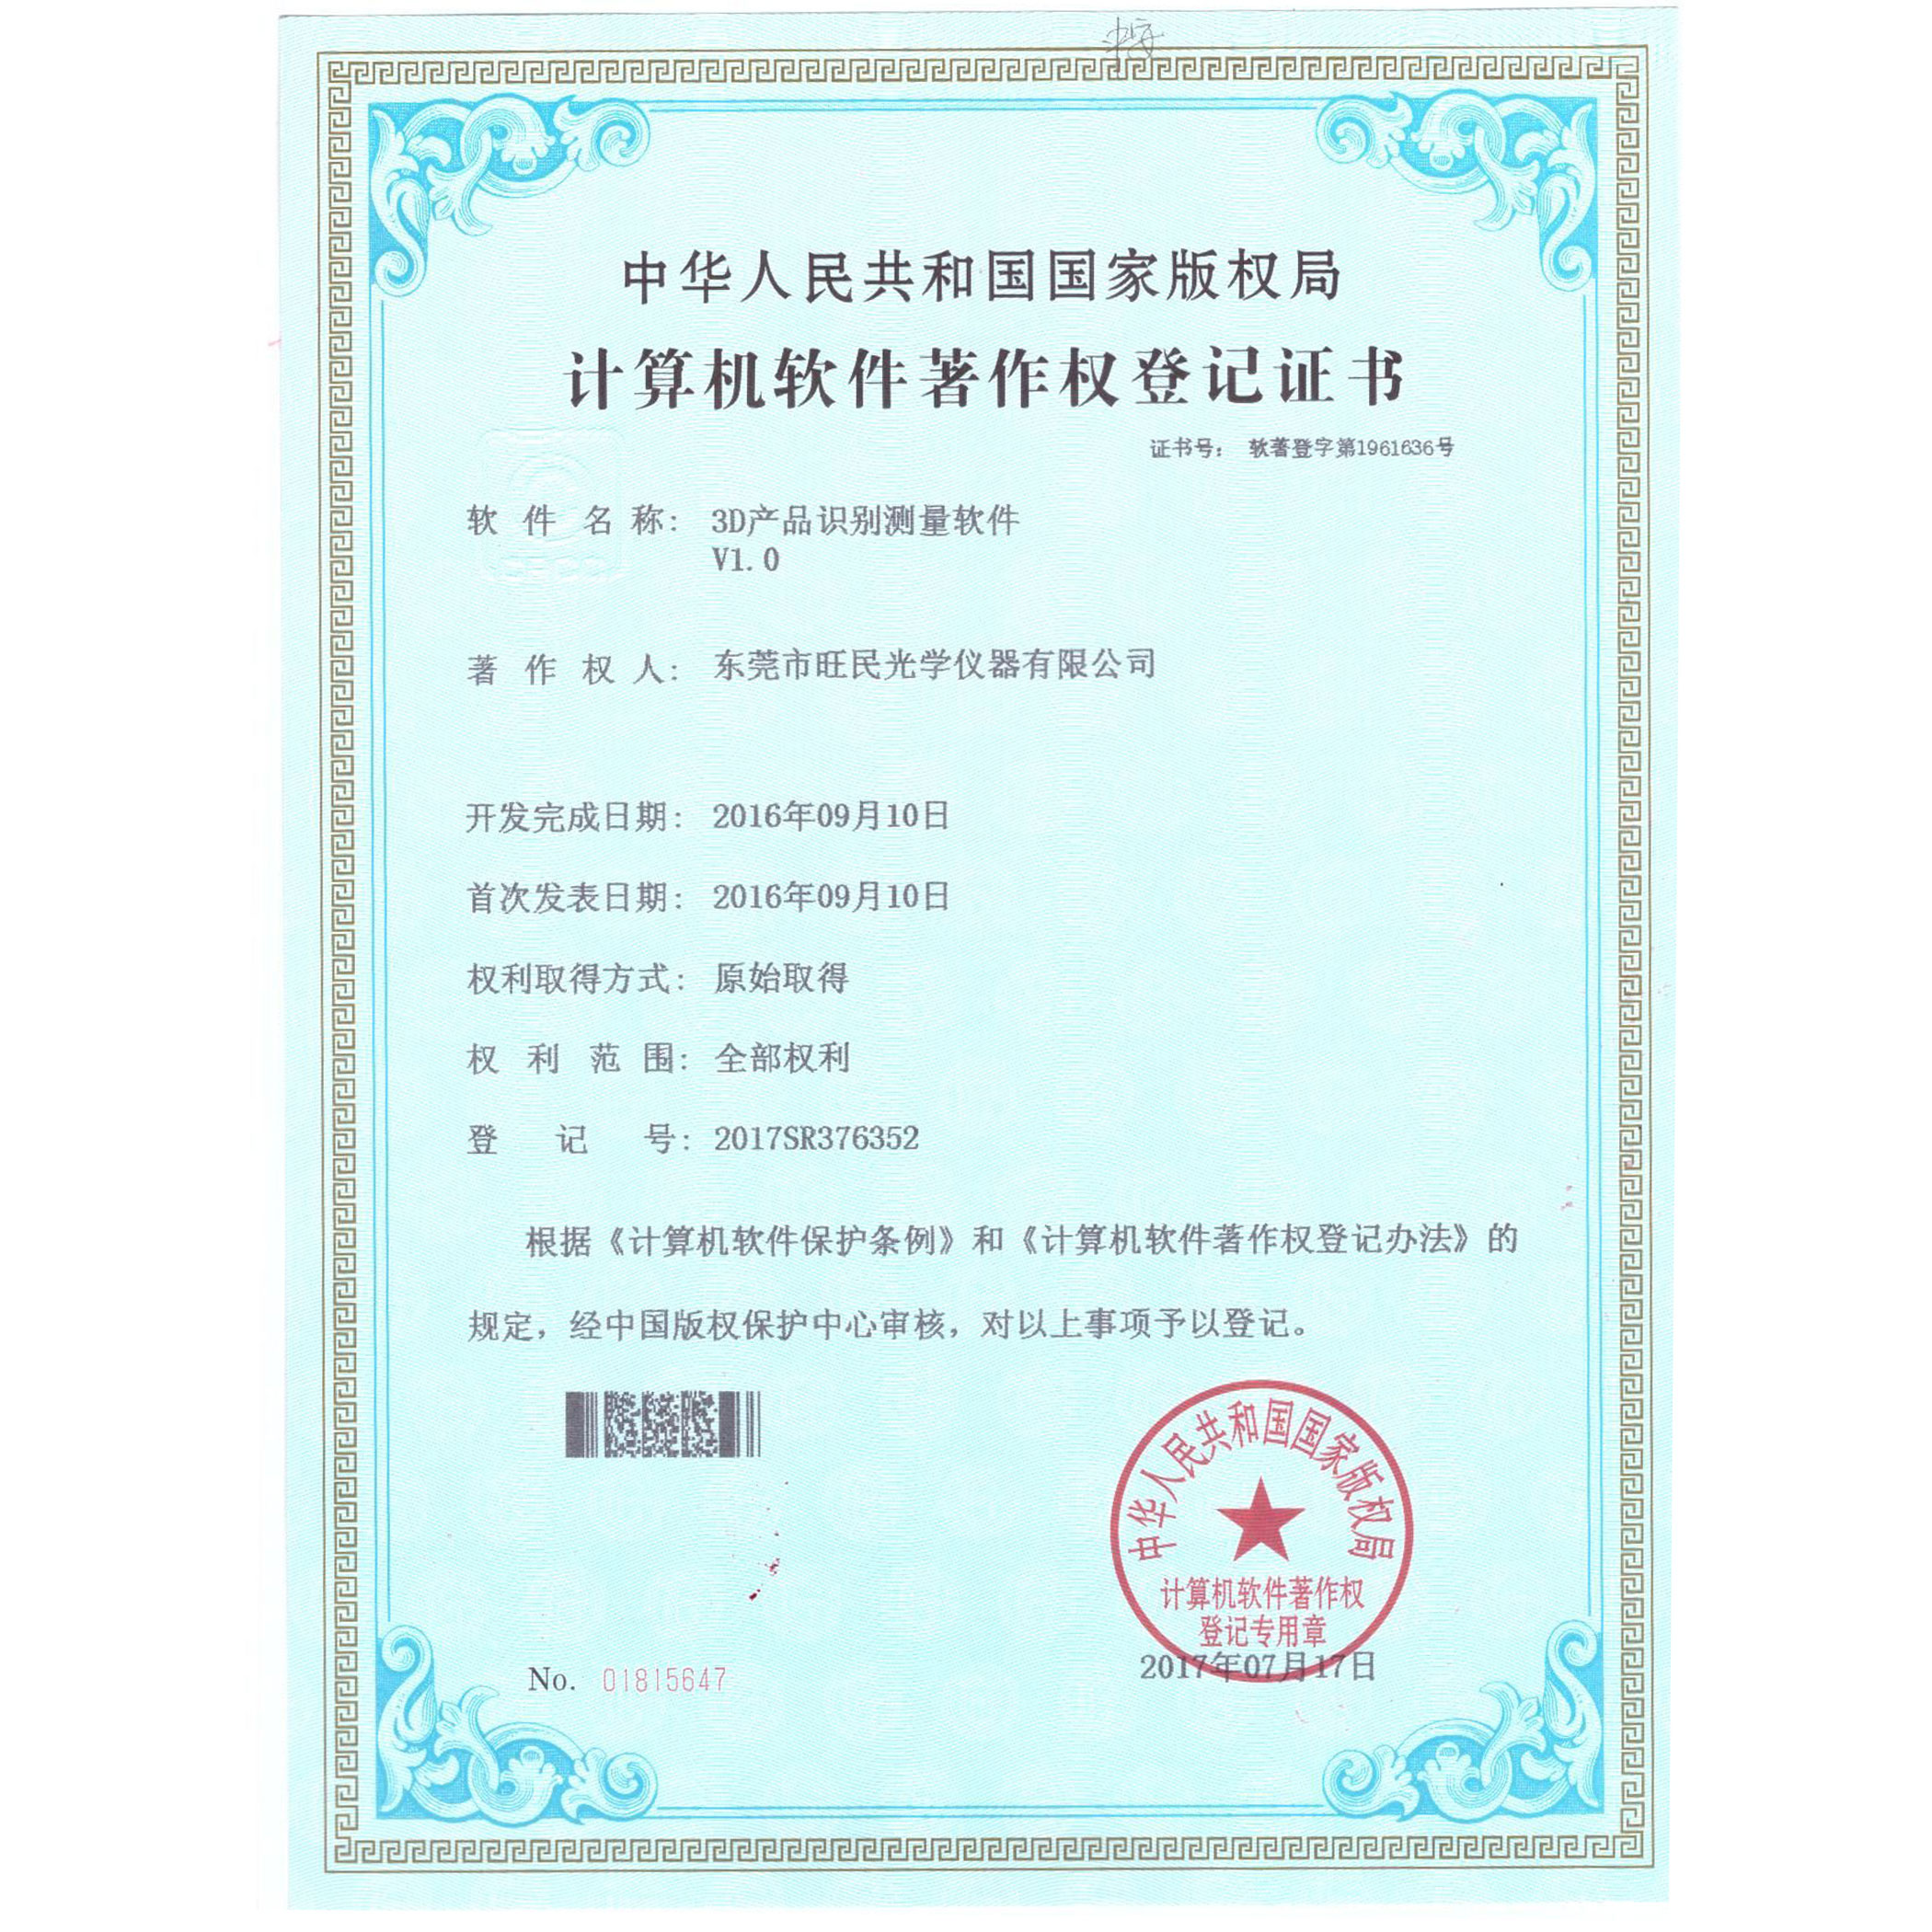 3D product identification measurement software certificate